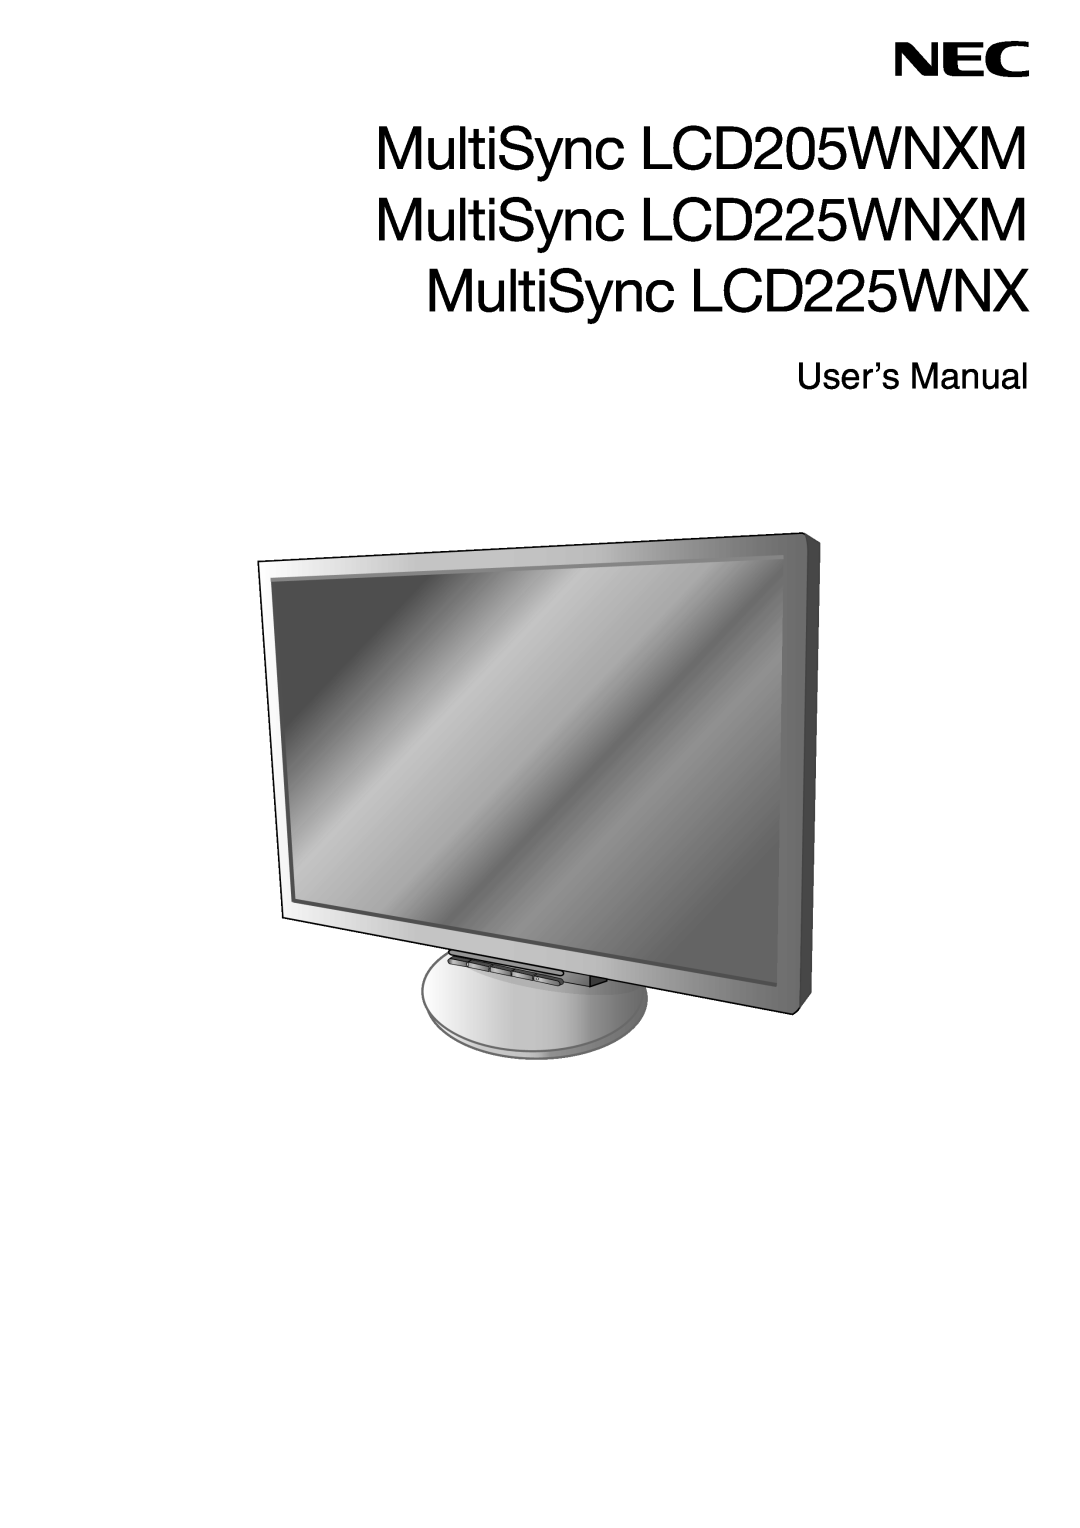 NEC user manual MultiSync LCD205WNXM MultiSync LCD225WNXM MultiSync LCD225WNX, UserÕs Manual 